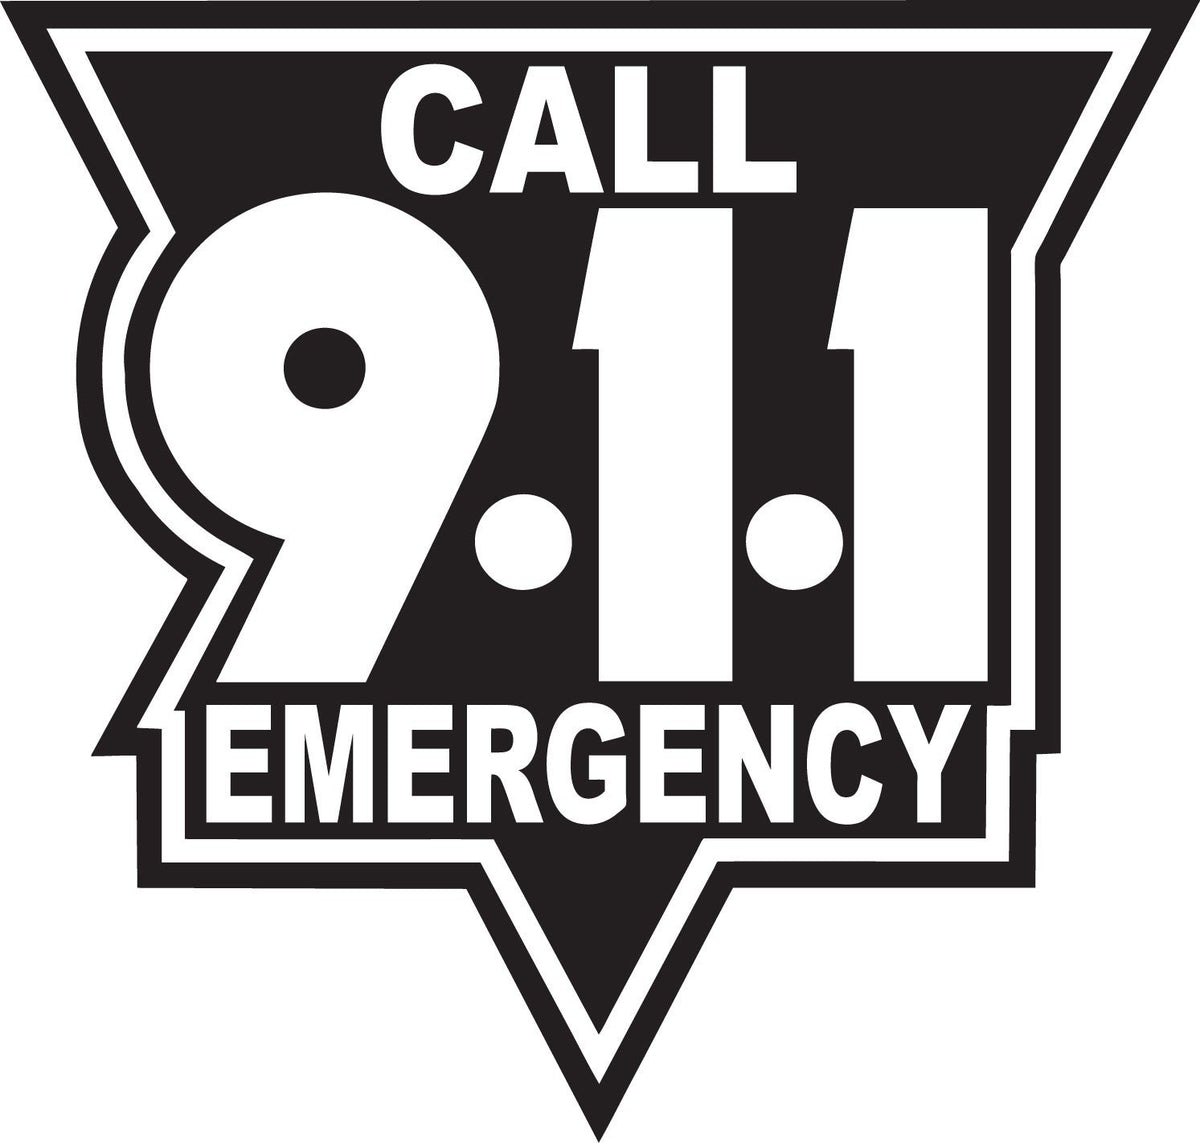 call-911-standard-black-reflective-vinyl-decals-fire-safety-decals